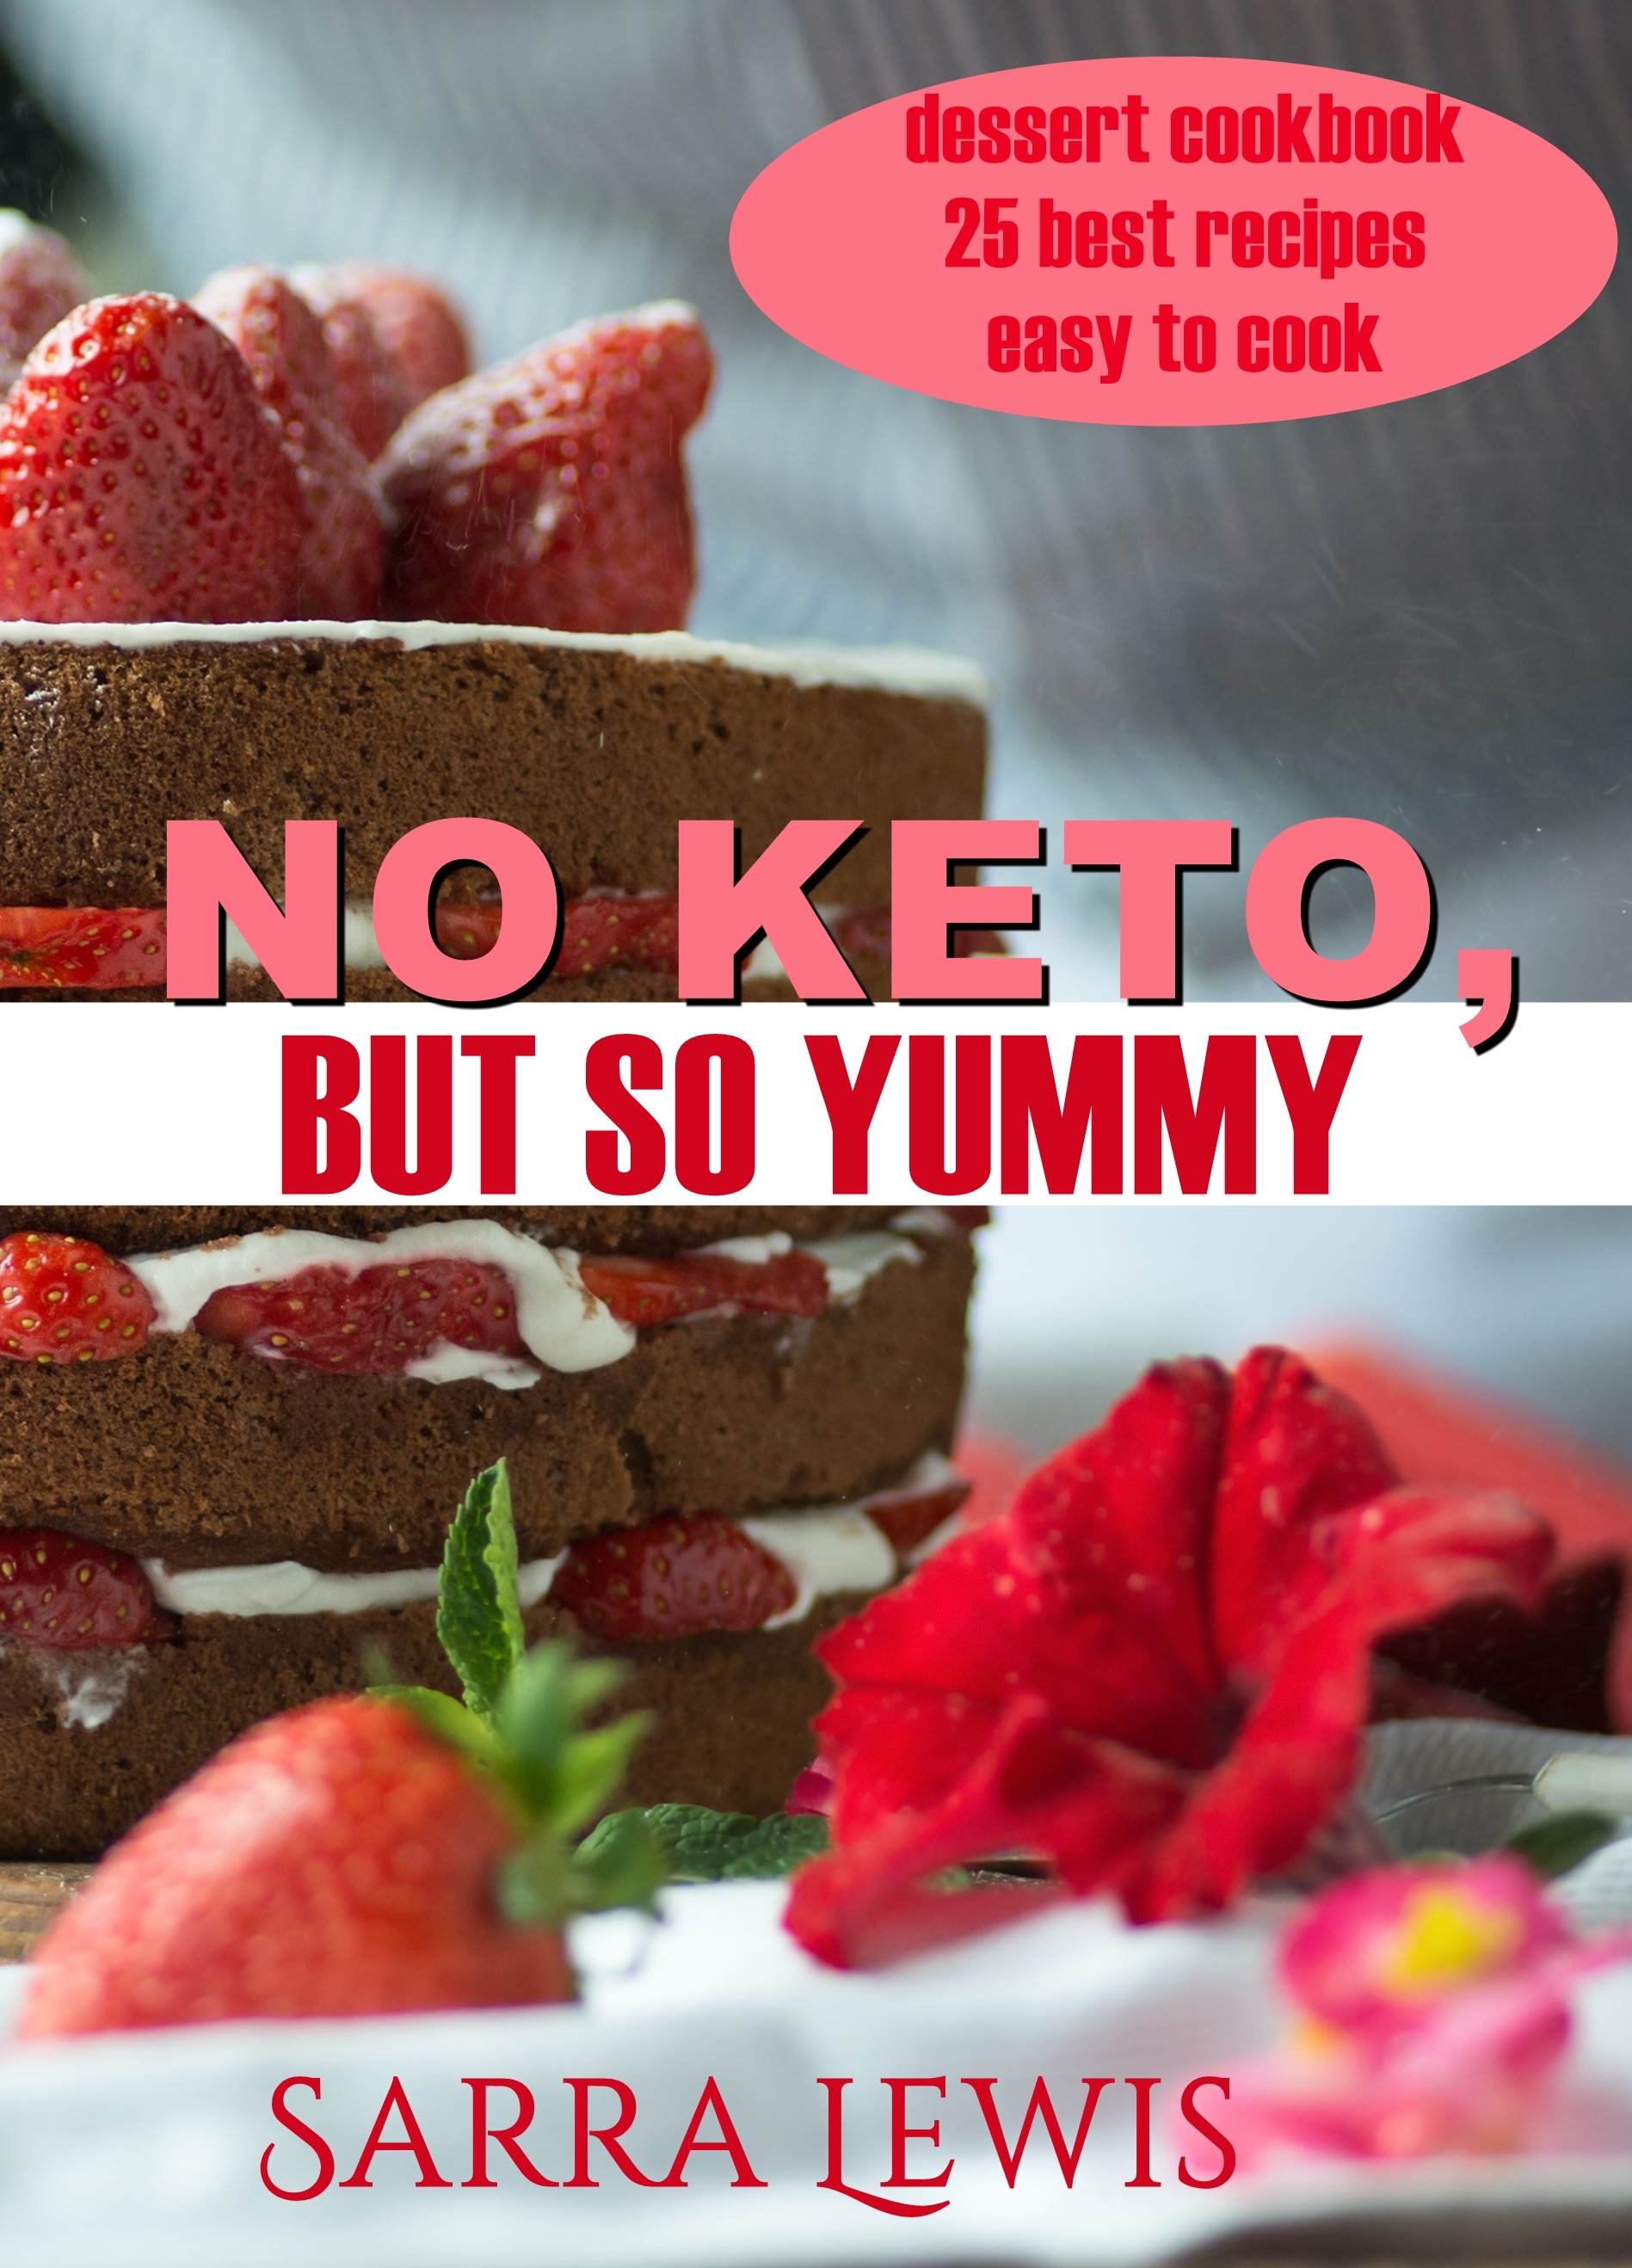 FREE: No KETO But So Yummy 25 best dessert recipes by Sarra Lewis